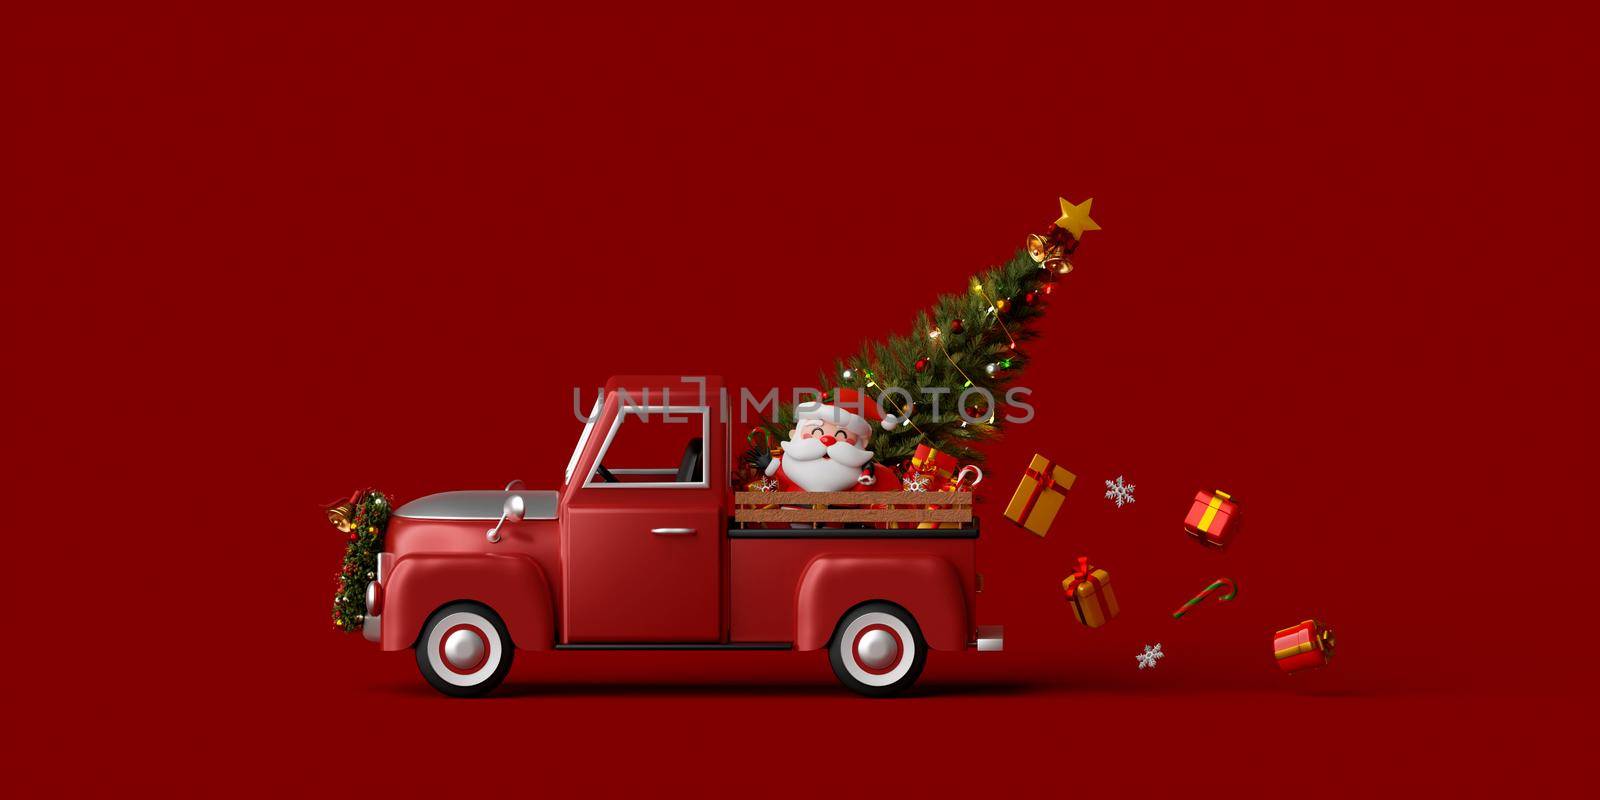 3d illustration Christmas banner Santa Claus on Christmas truck carrying Christmas tree and gift